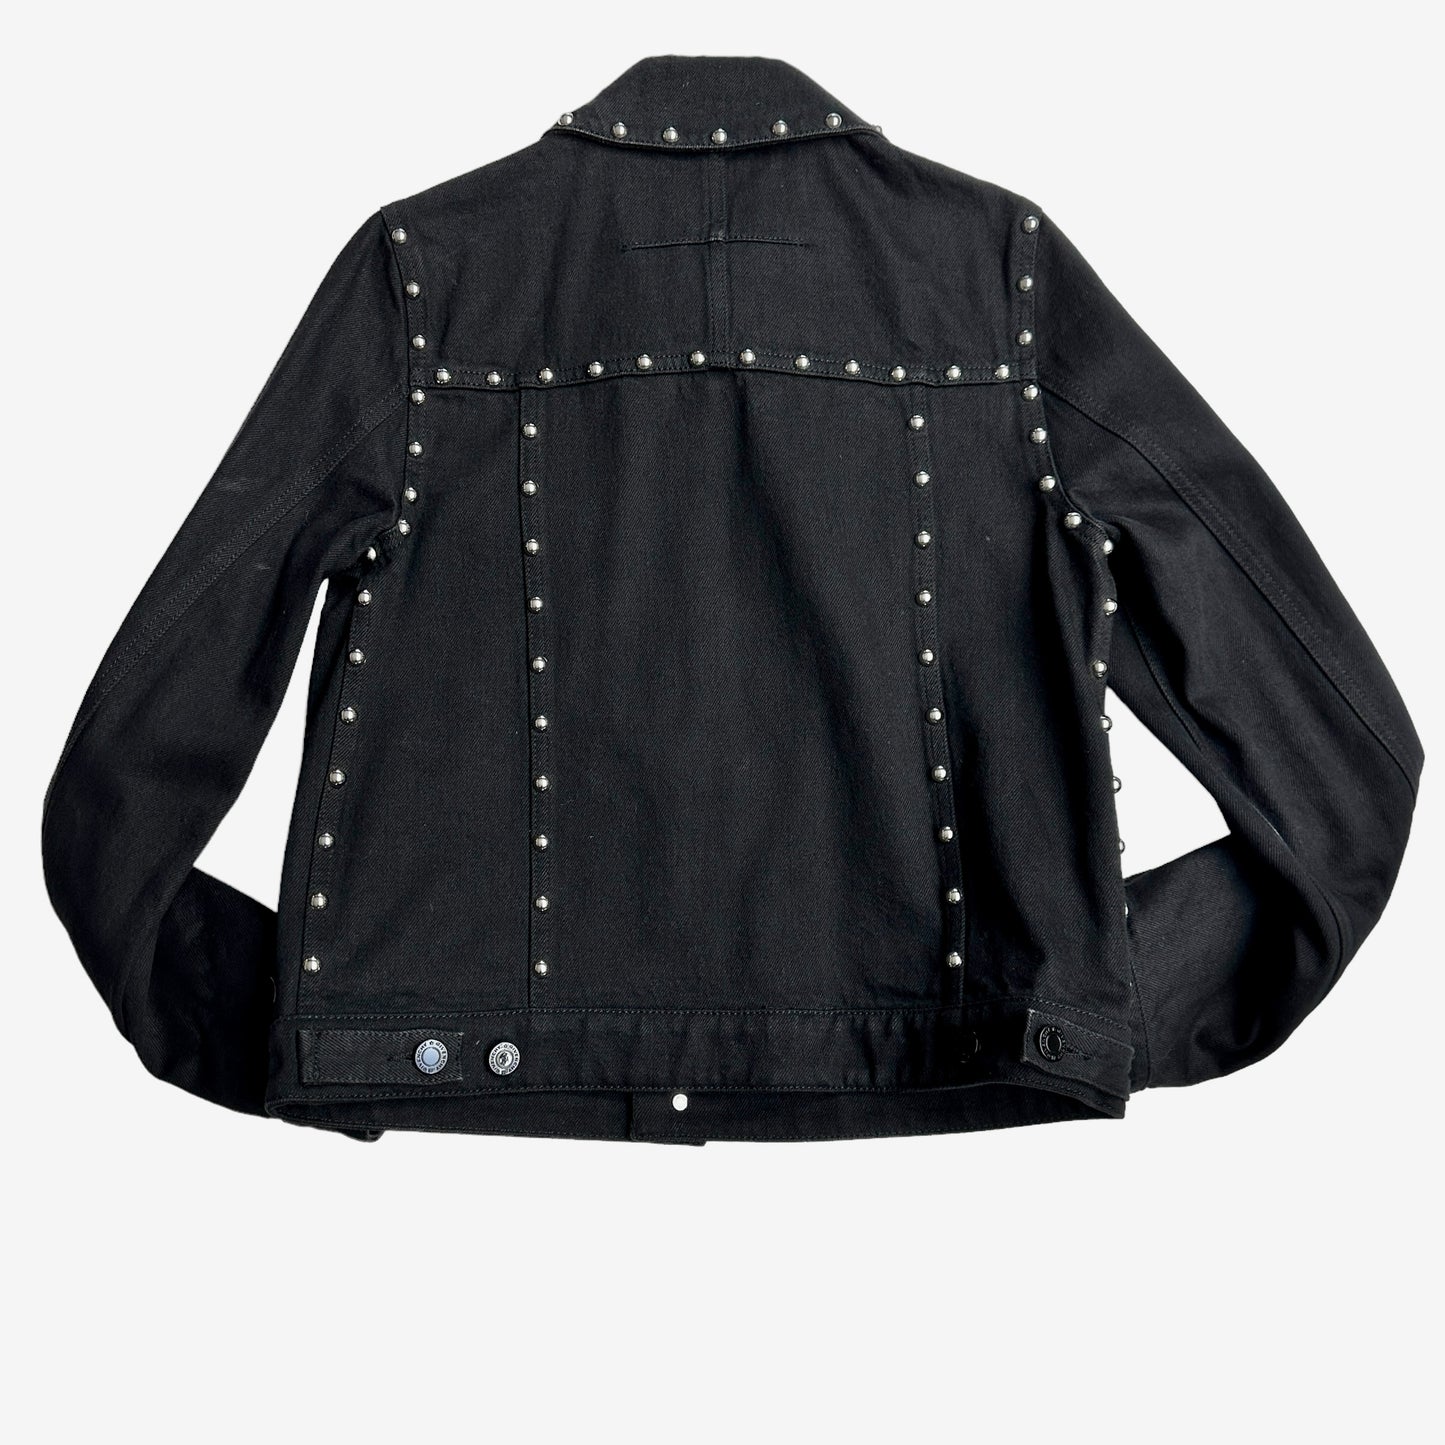 Studded Black Denim Jacket - S